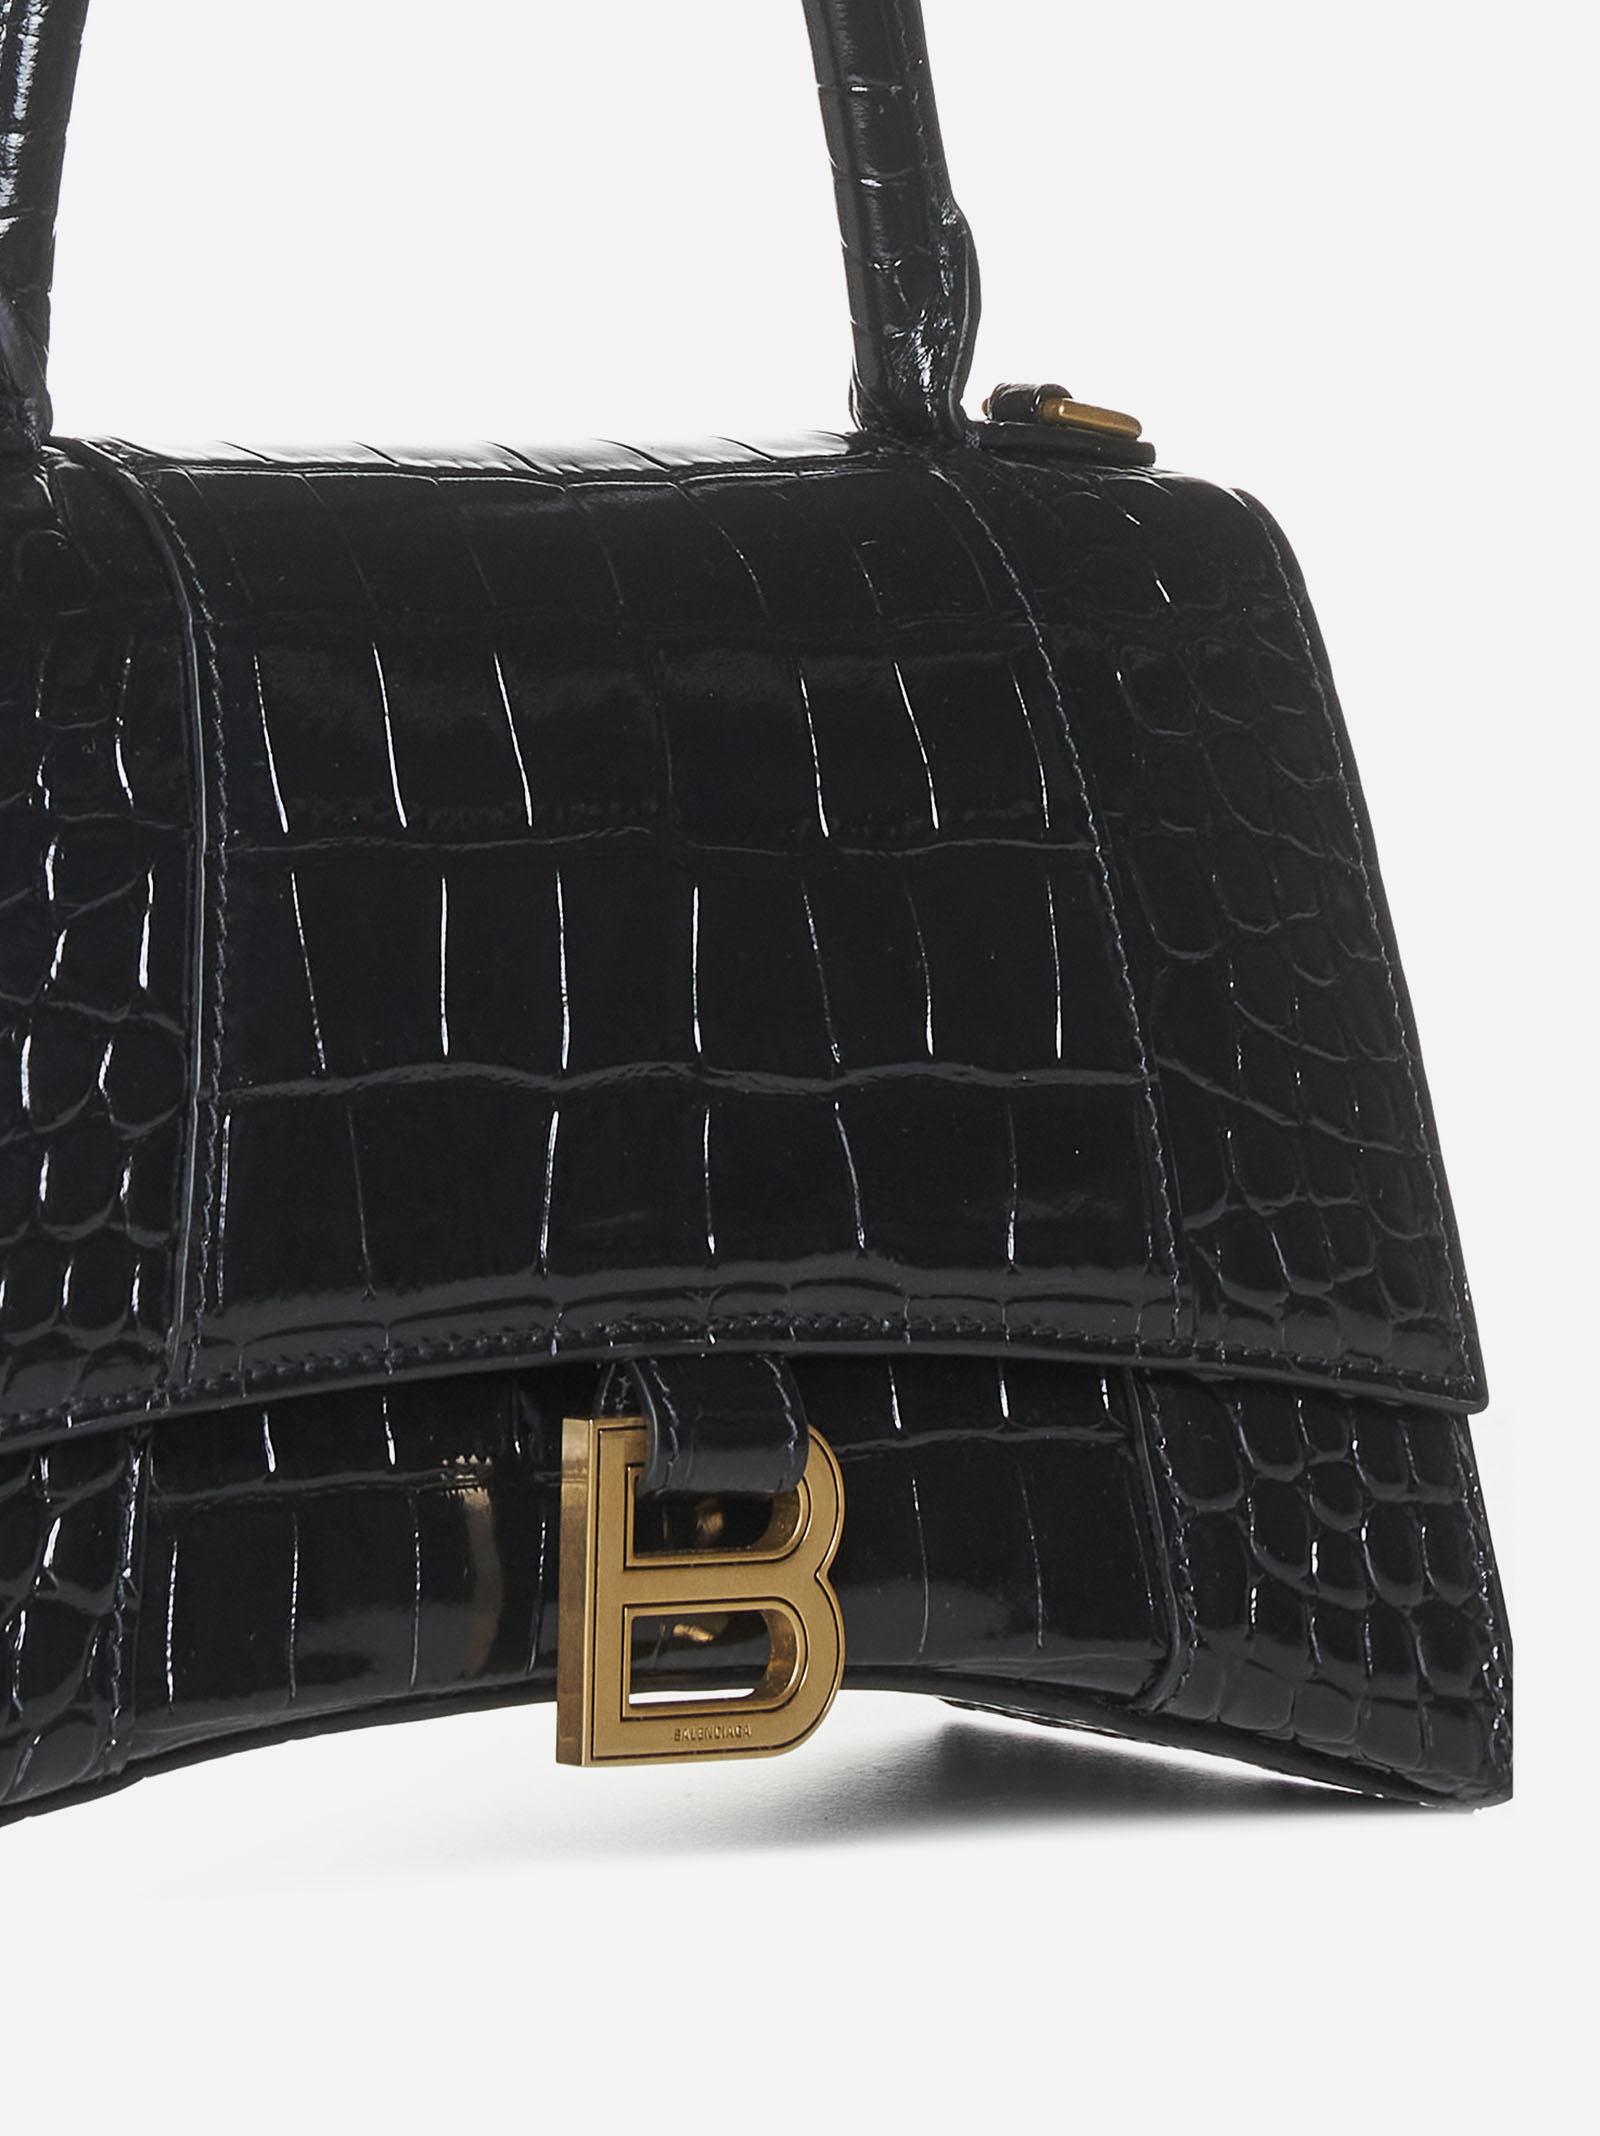 Black Hourglass S crocodile-effect leather bag, Balenciaga